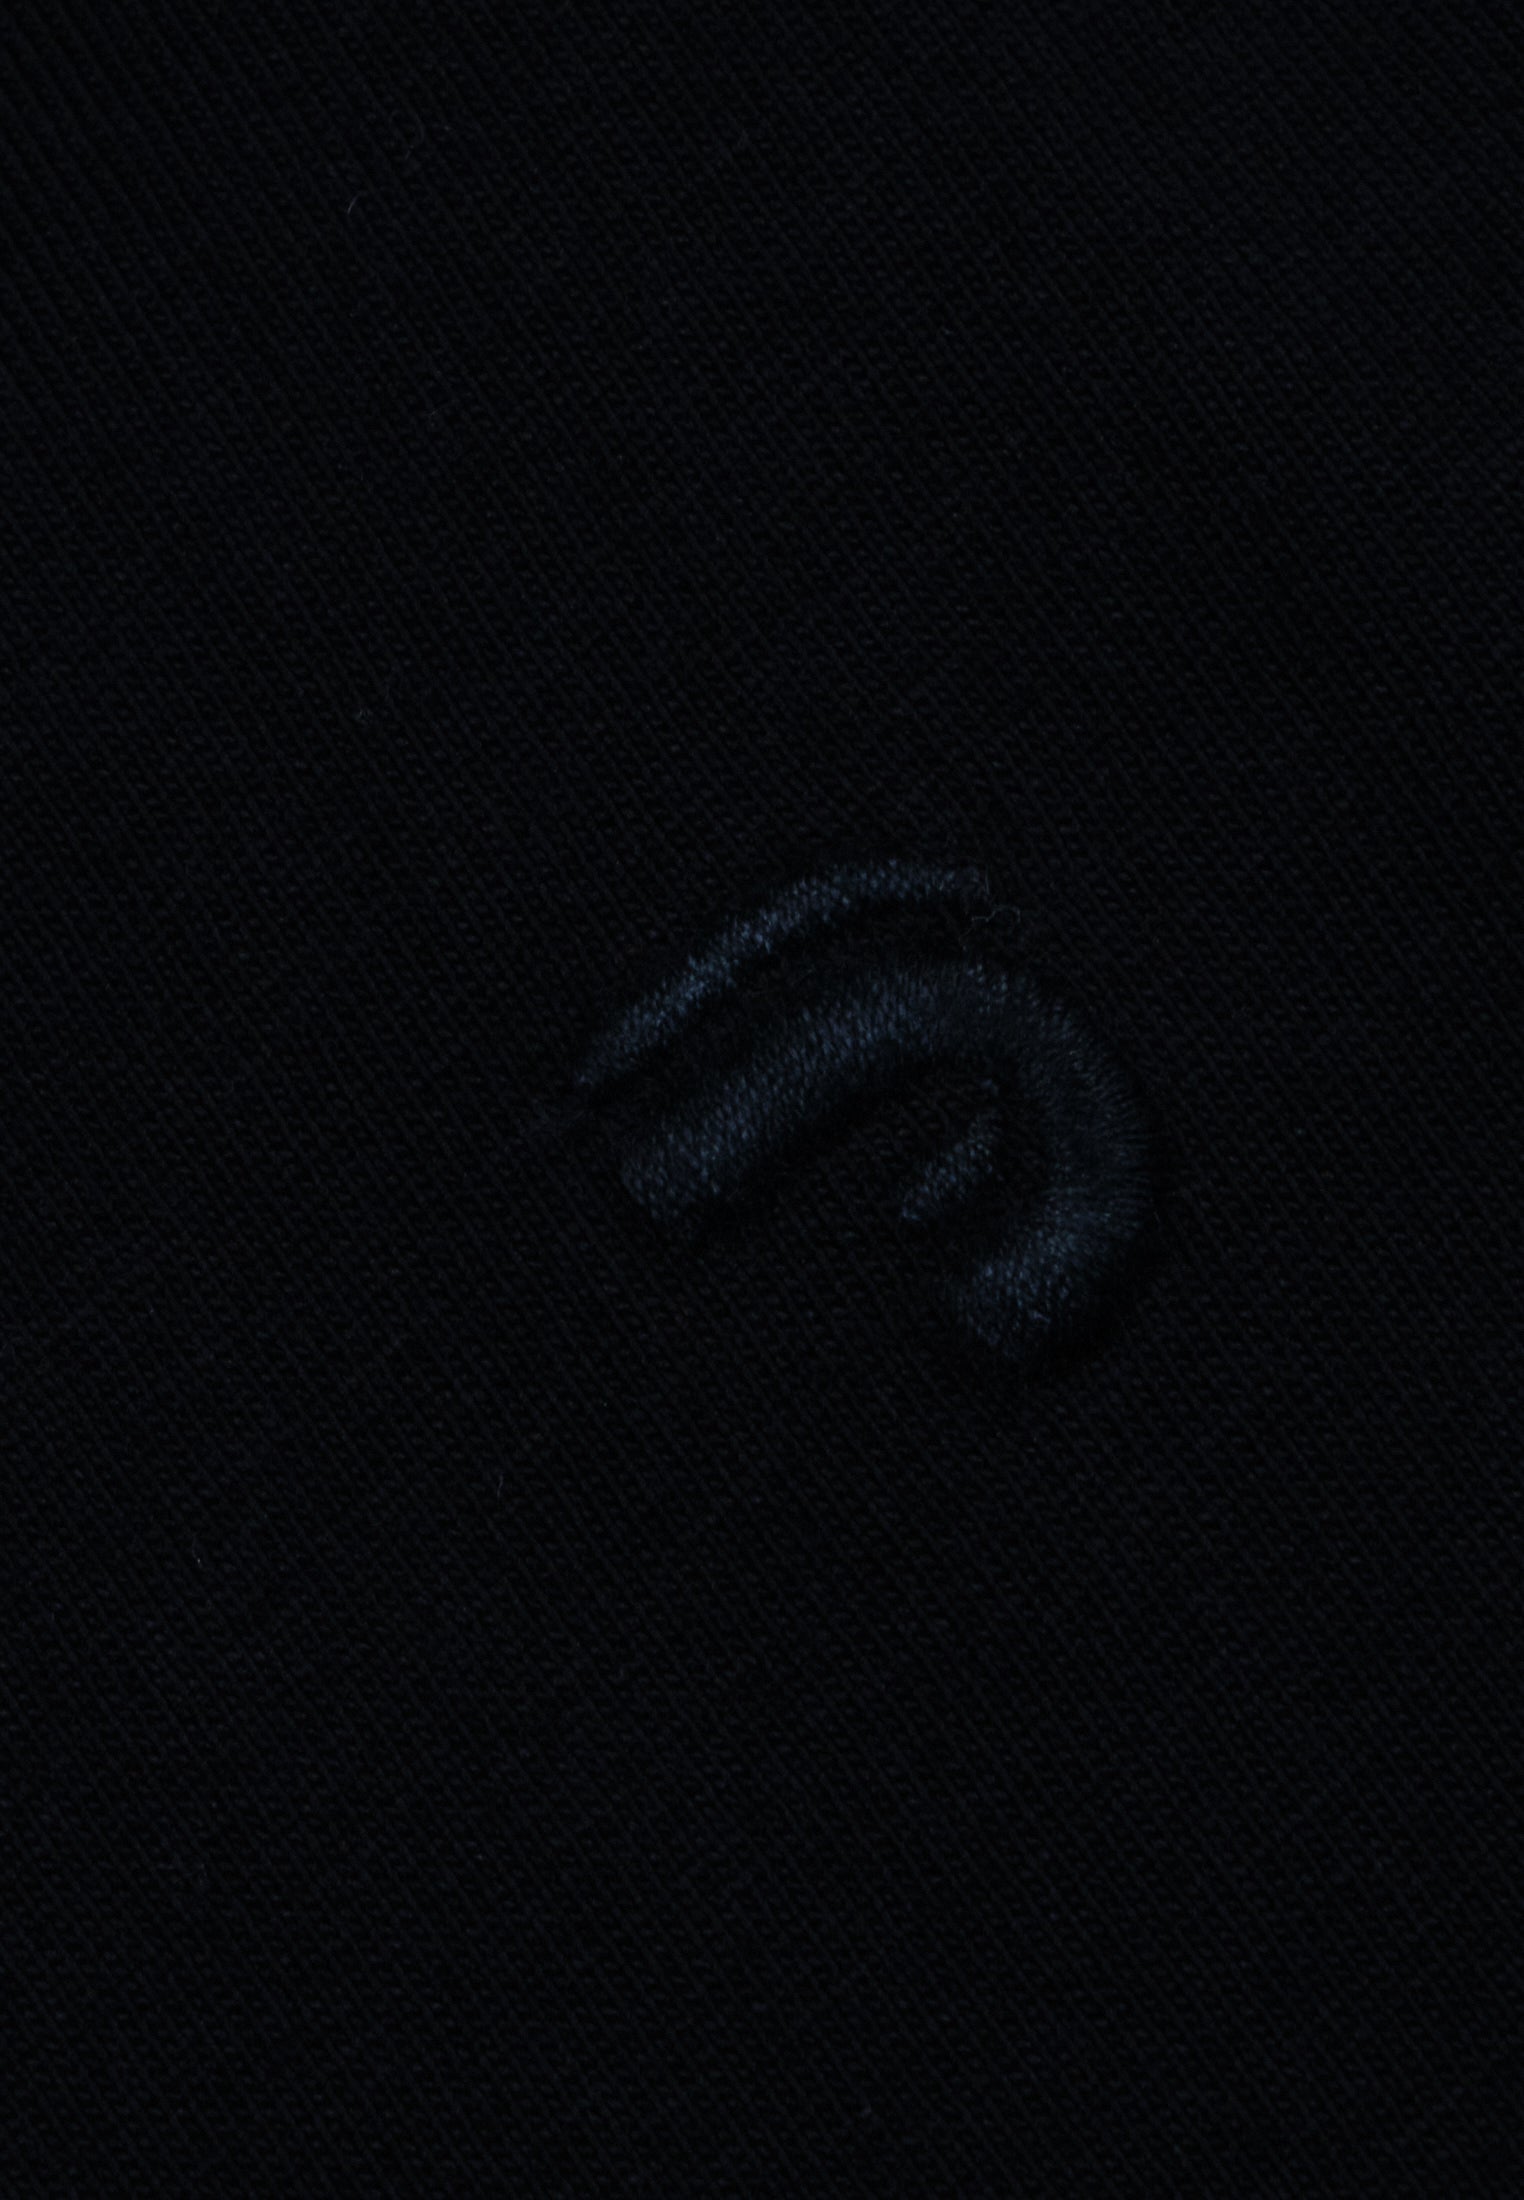 T-Shirt Homme Essentials 04 Black Caviar | J&JOY.